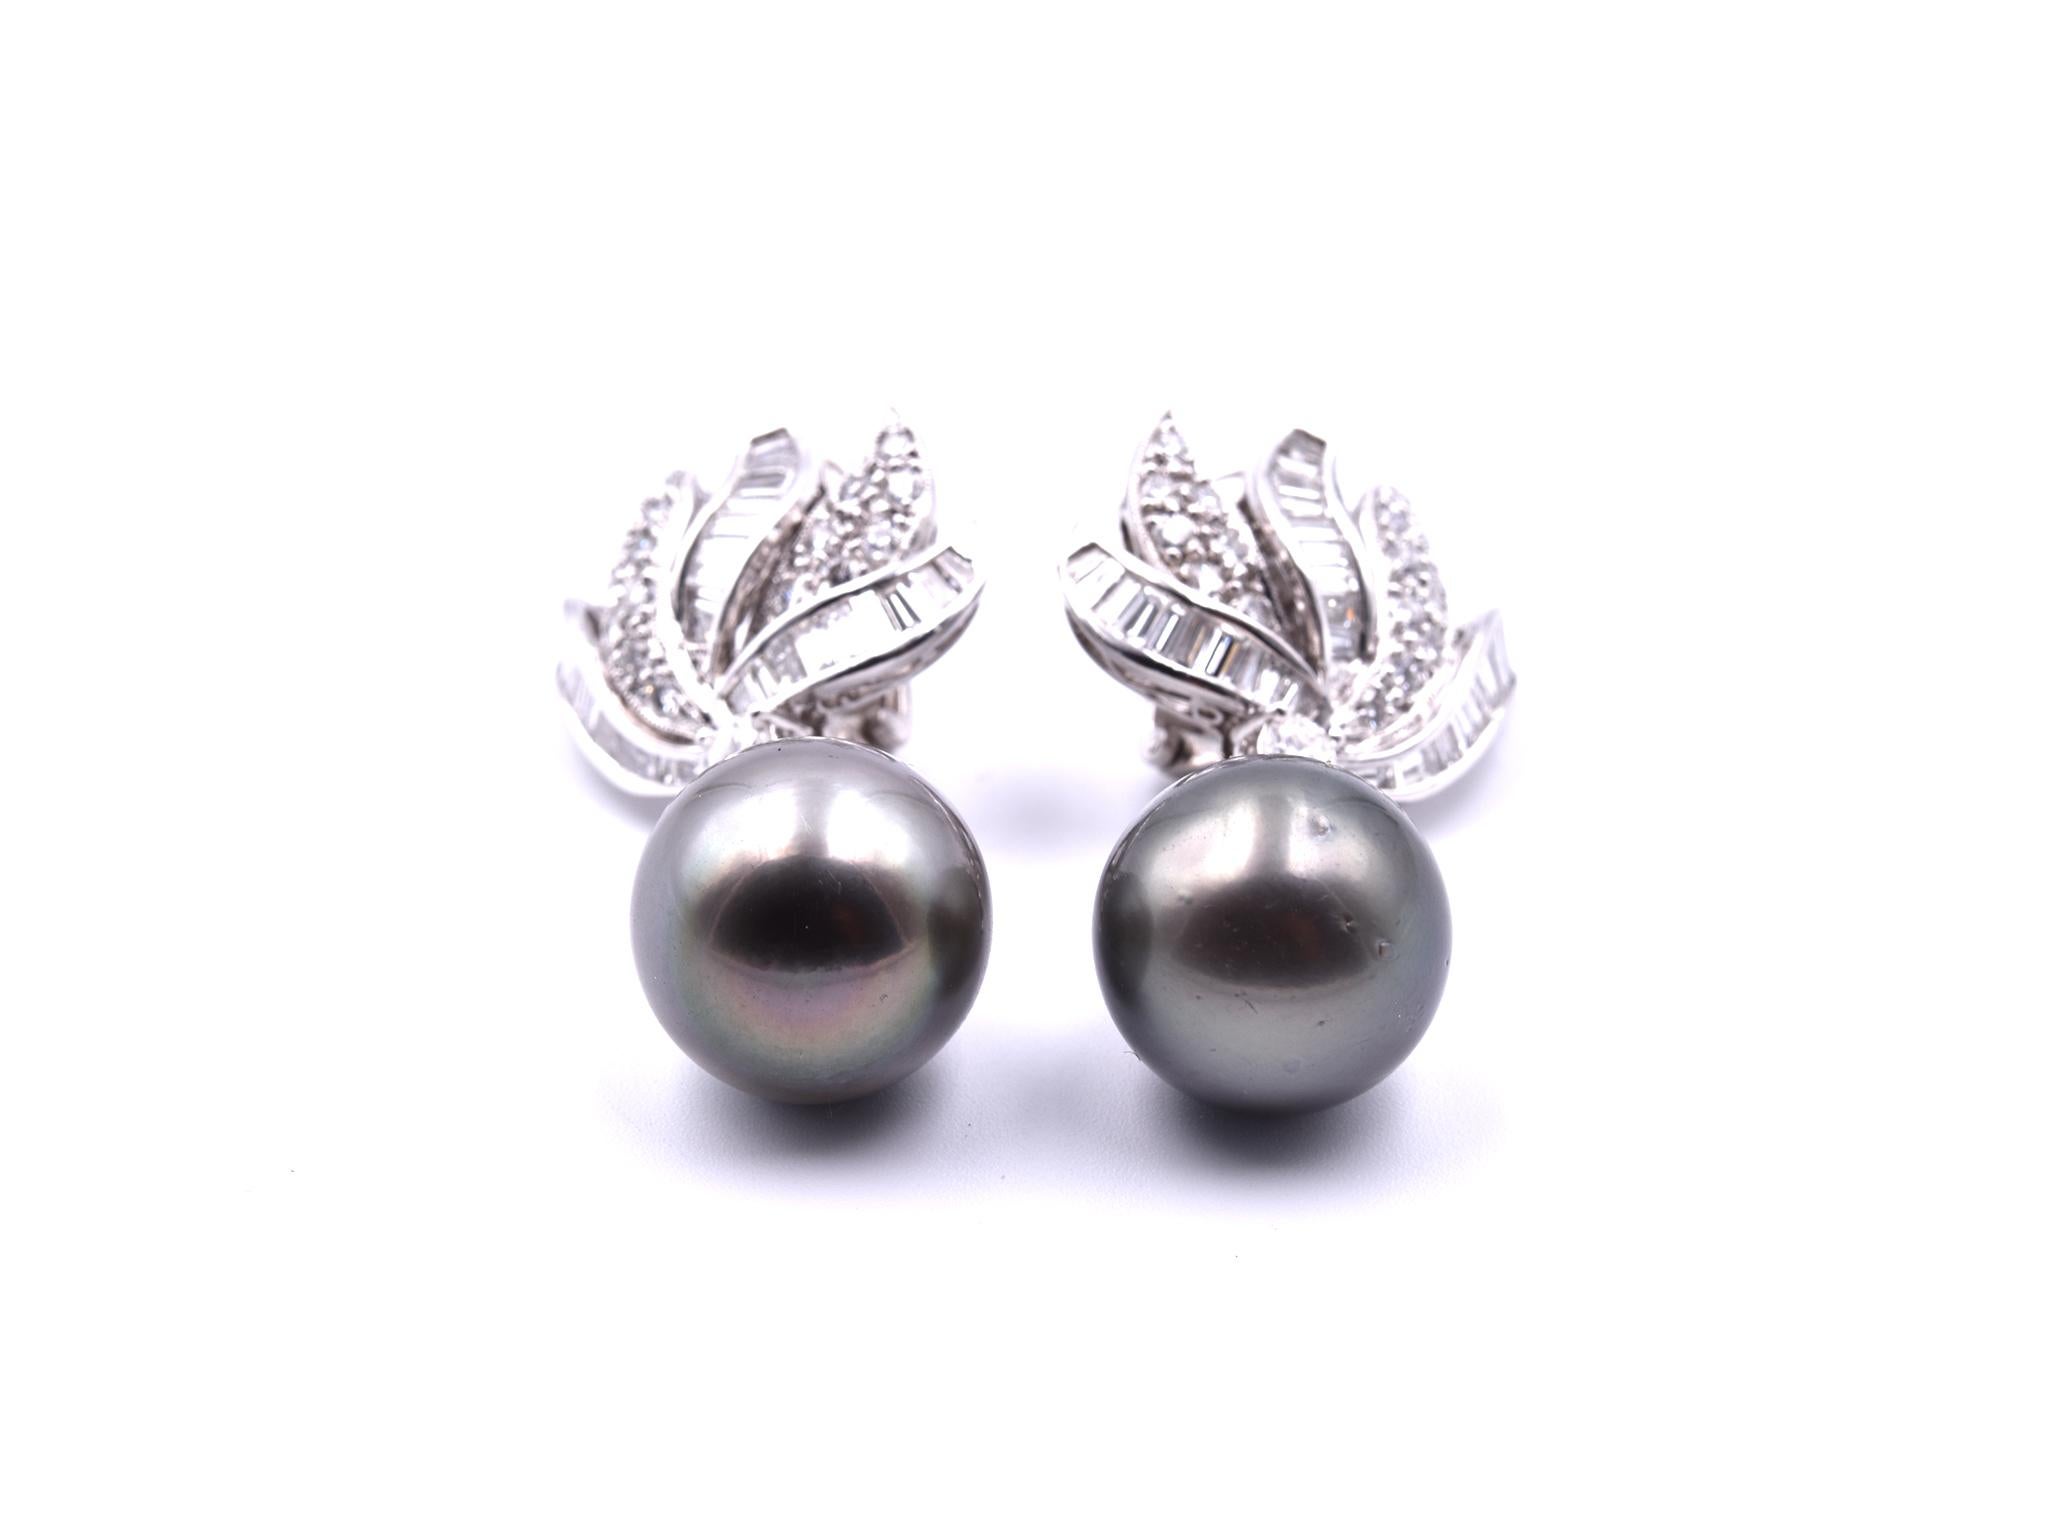 Designer: custom design
Material: 18k white gold 
Diamonds: =13.11cttw on necklace
Color: G
Clarity: VS2-SI1
Diamonds: =4.58cttw on earrings
Color: G
Clarity: VS2-SI1
Tahitian Pearls: 5= 12mm -12.5mm
Tahitian Pearls: 2=15mm-15.5mm
Dimensions: